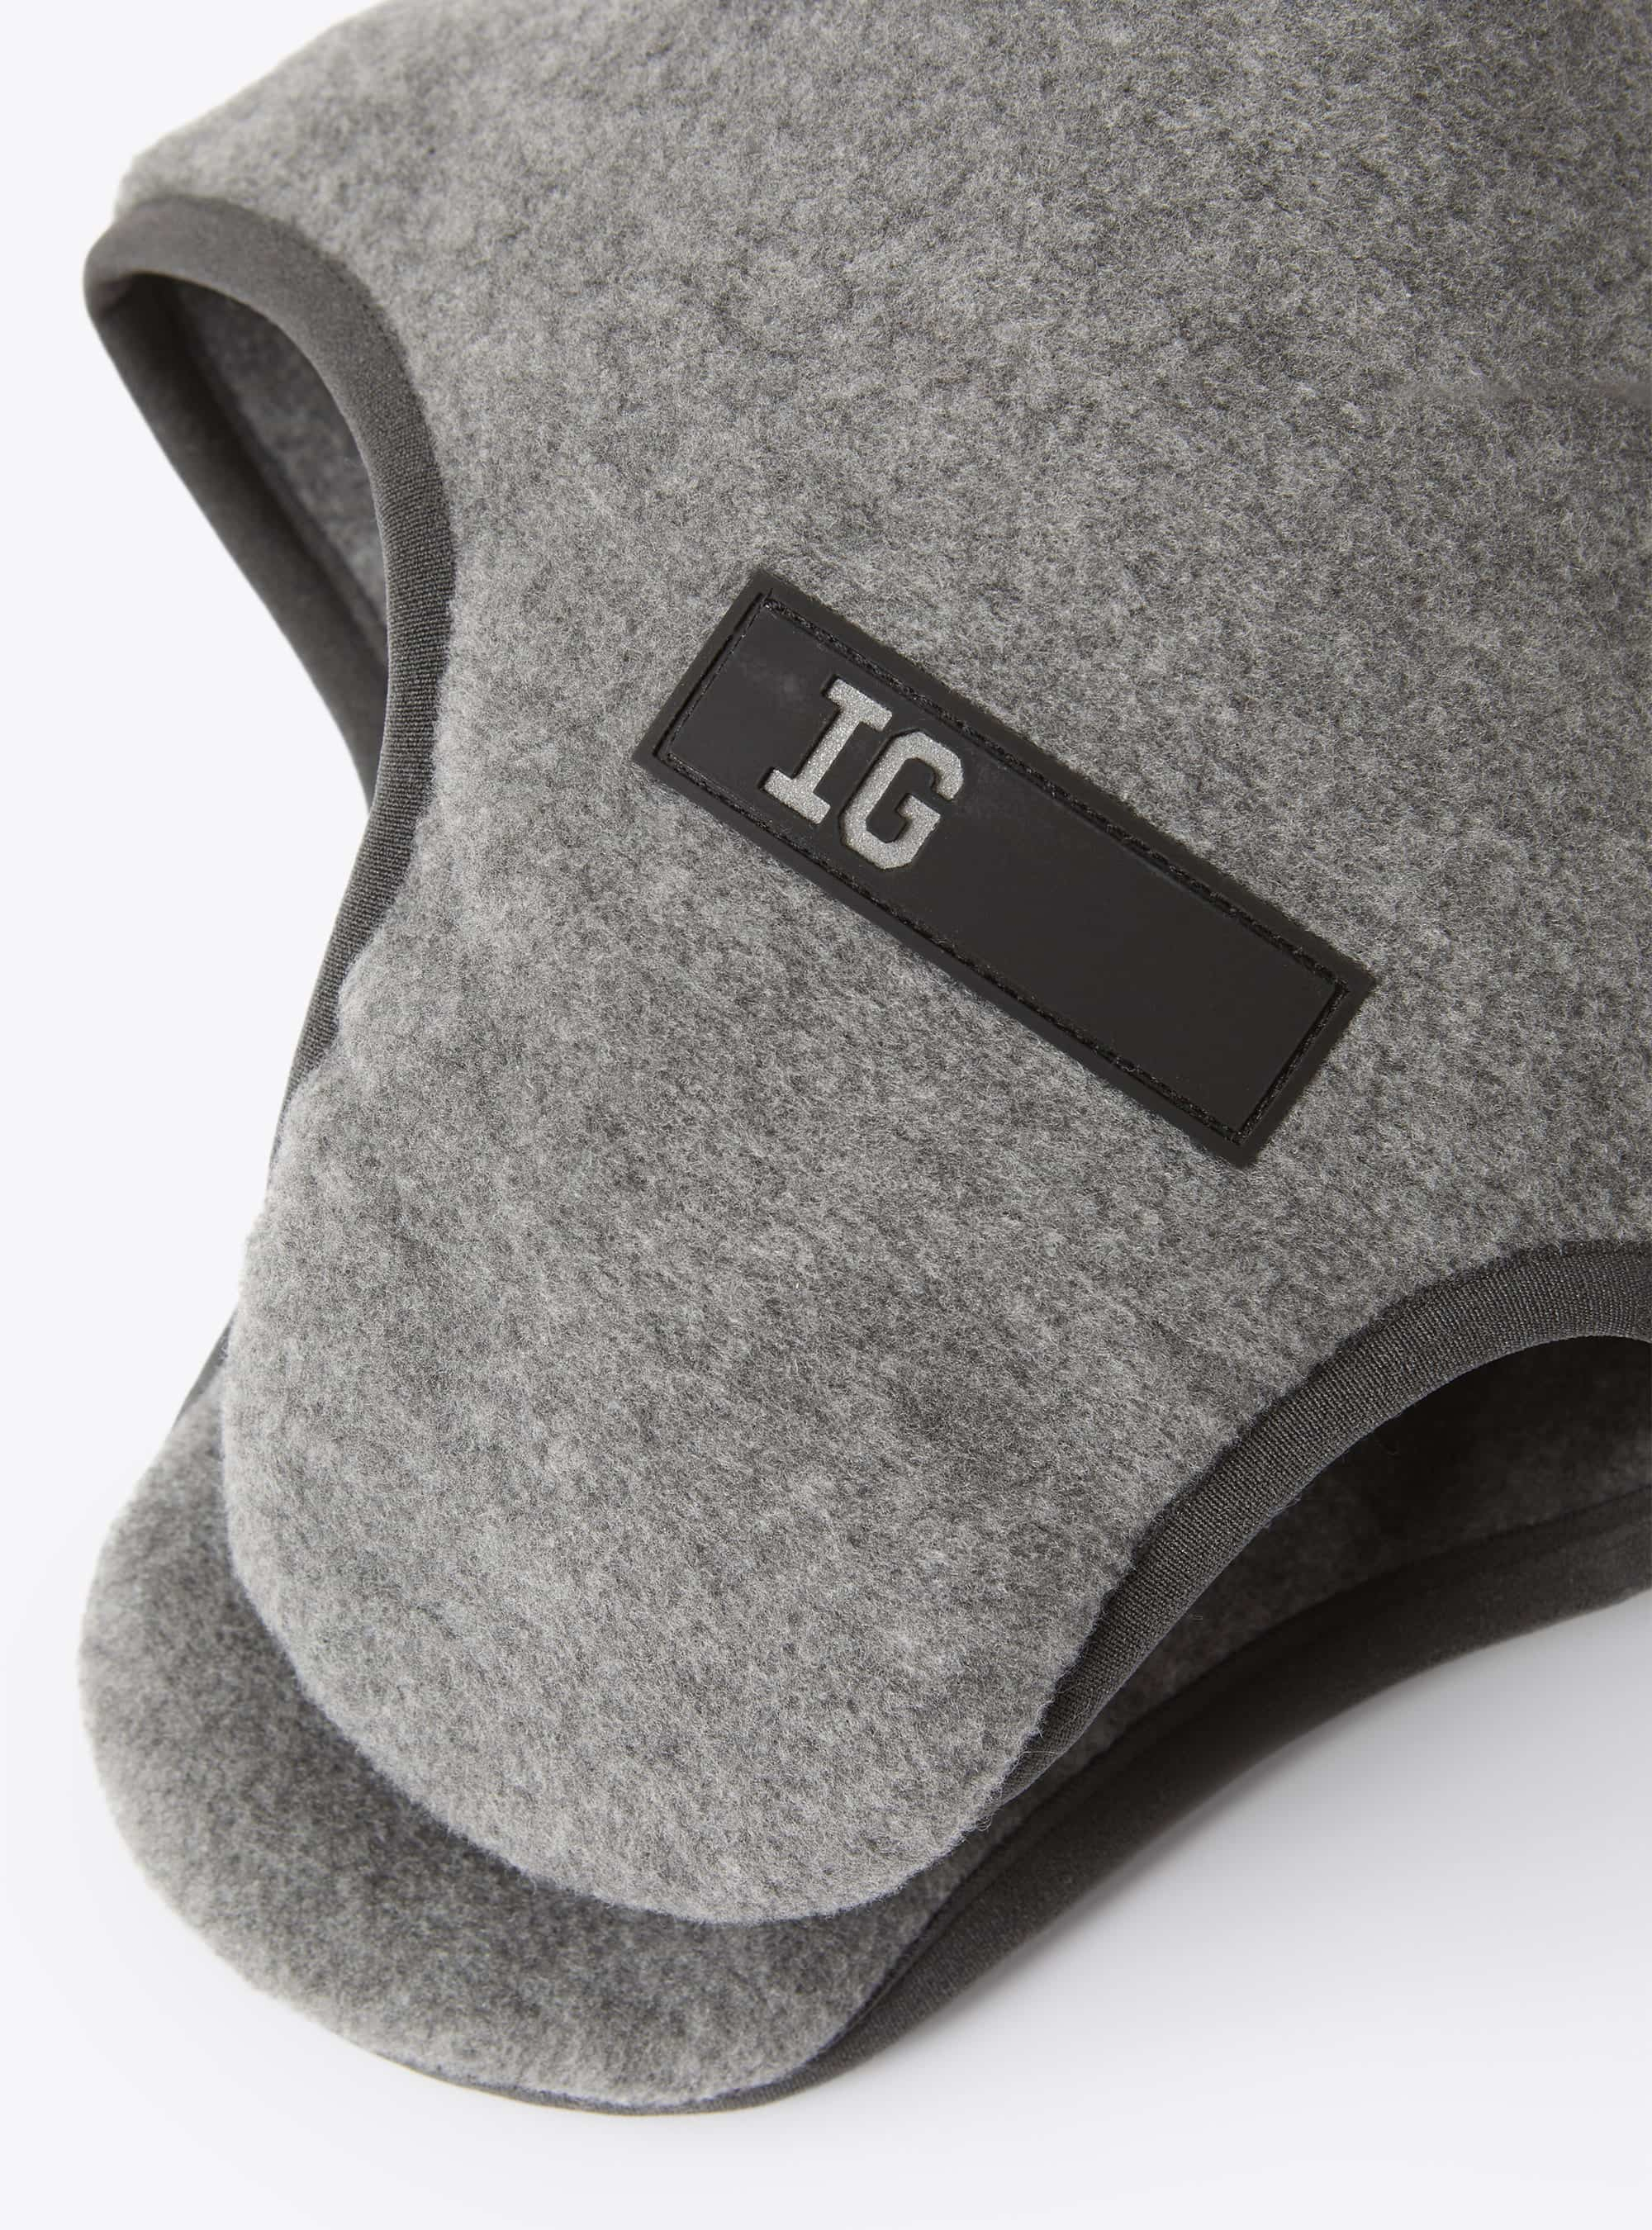 Fleece baby hat - Grey | Il Gufo